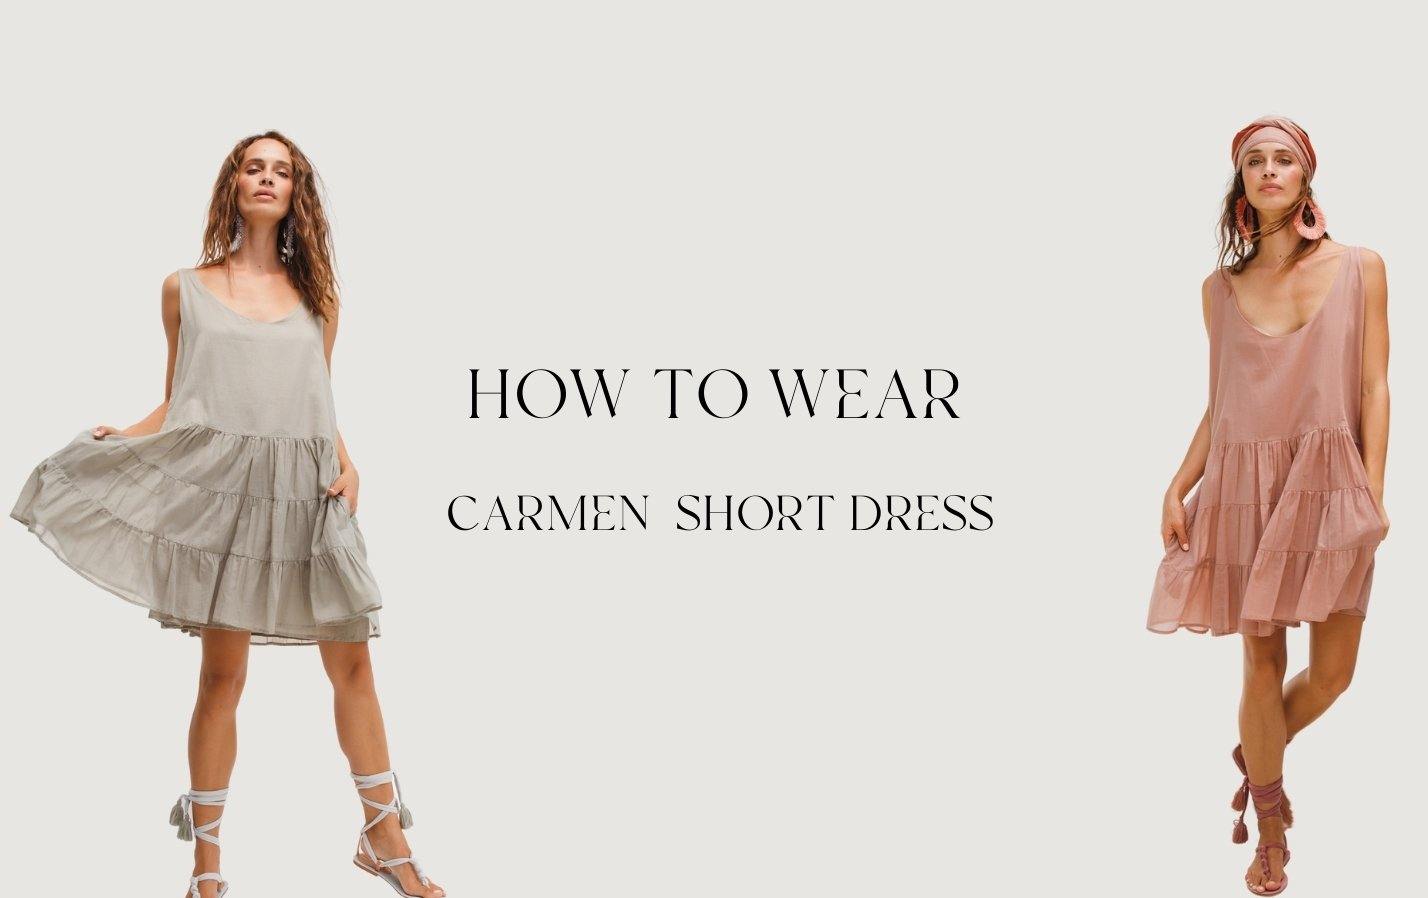 HOW TO WEAR CARMEN SHORT DRESS - Erika Peña